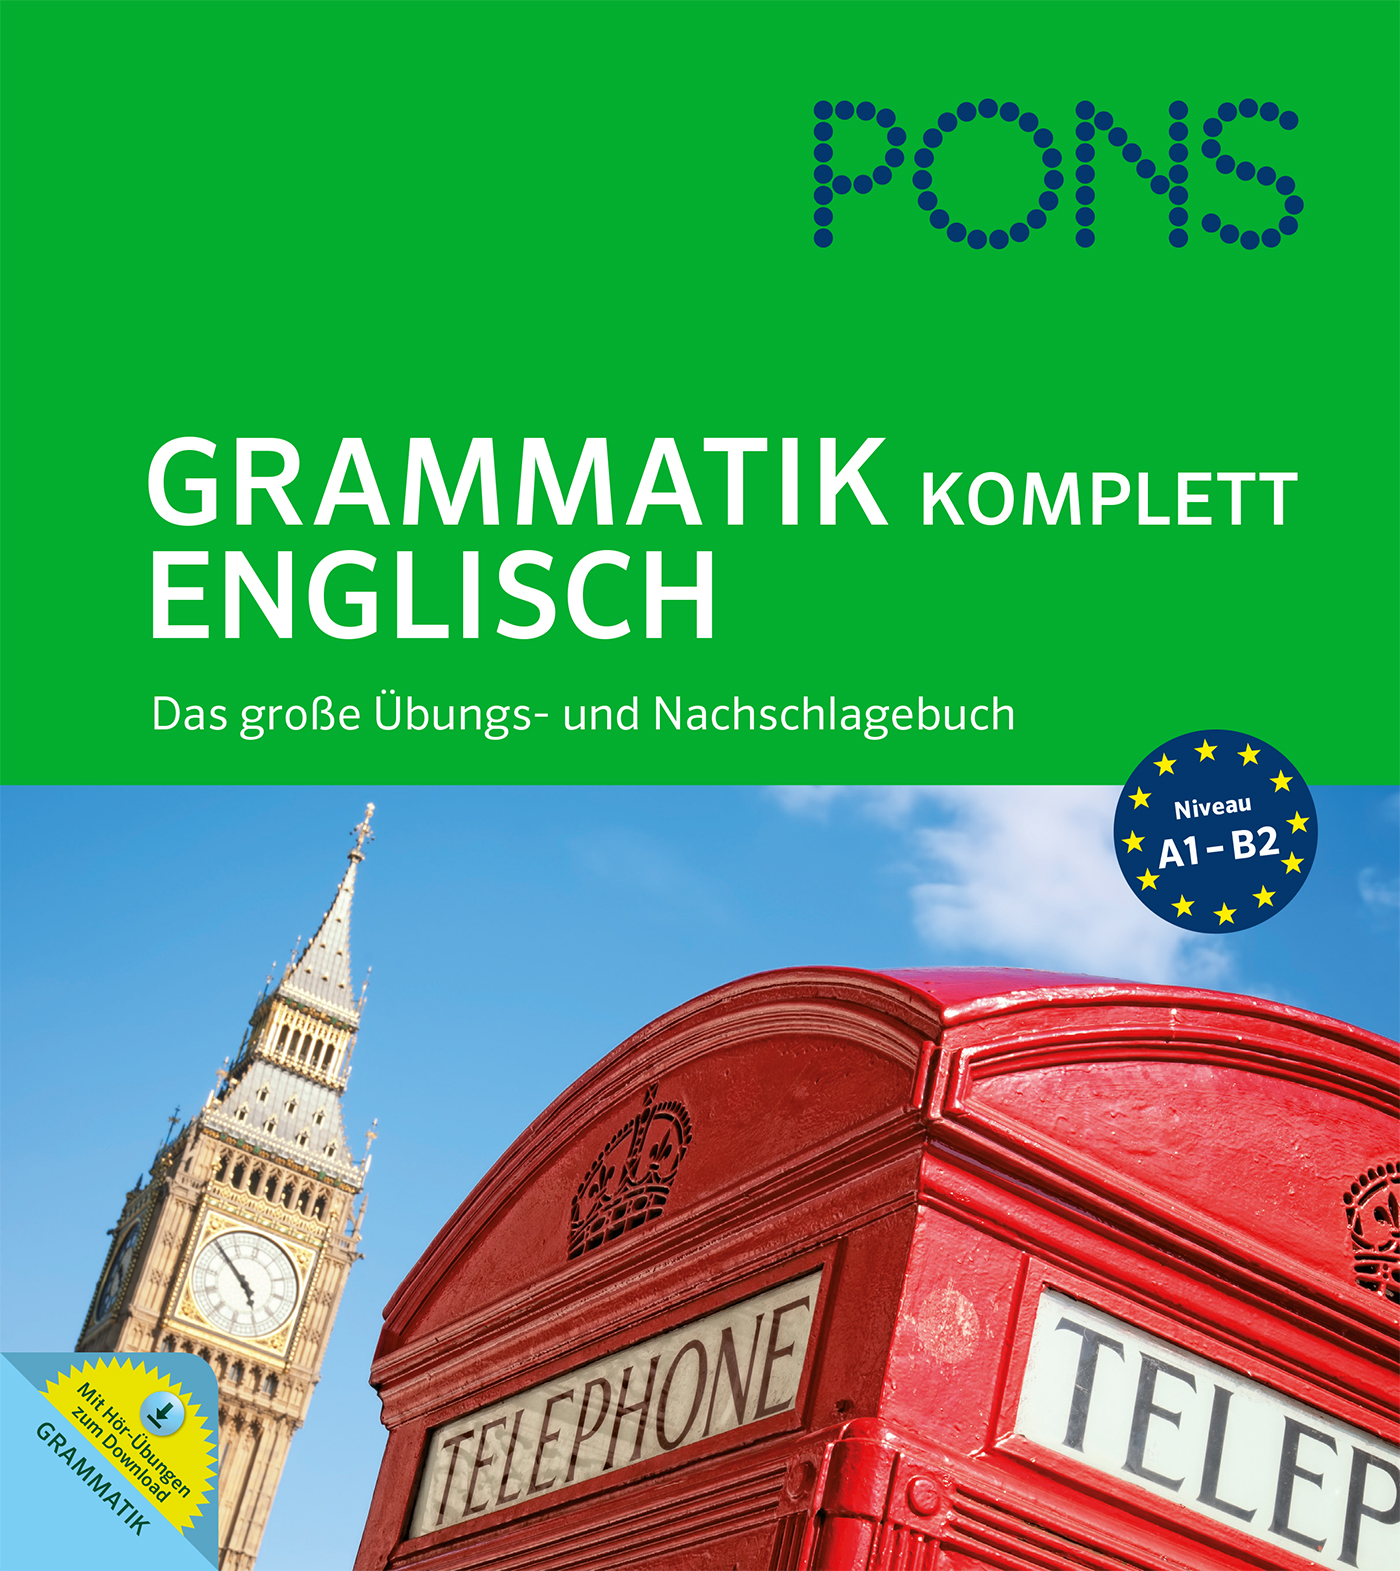 PONS Grammatik komplett Englisch